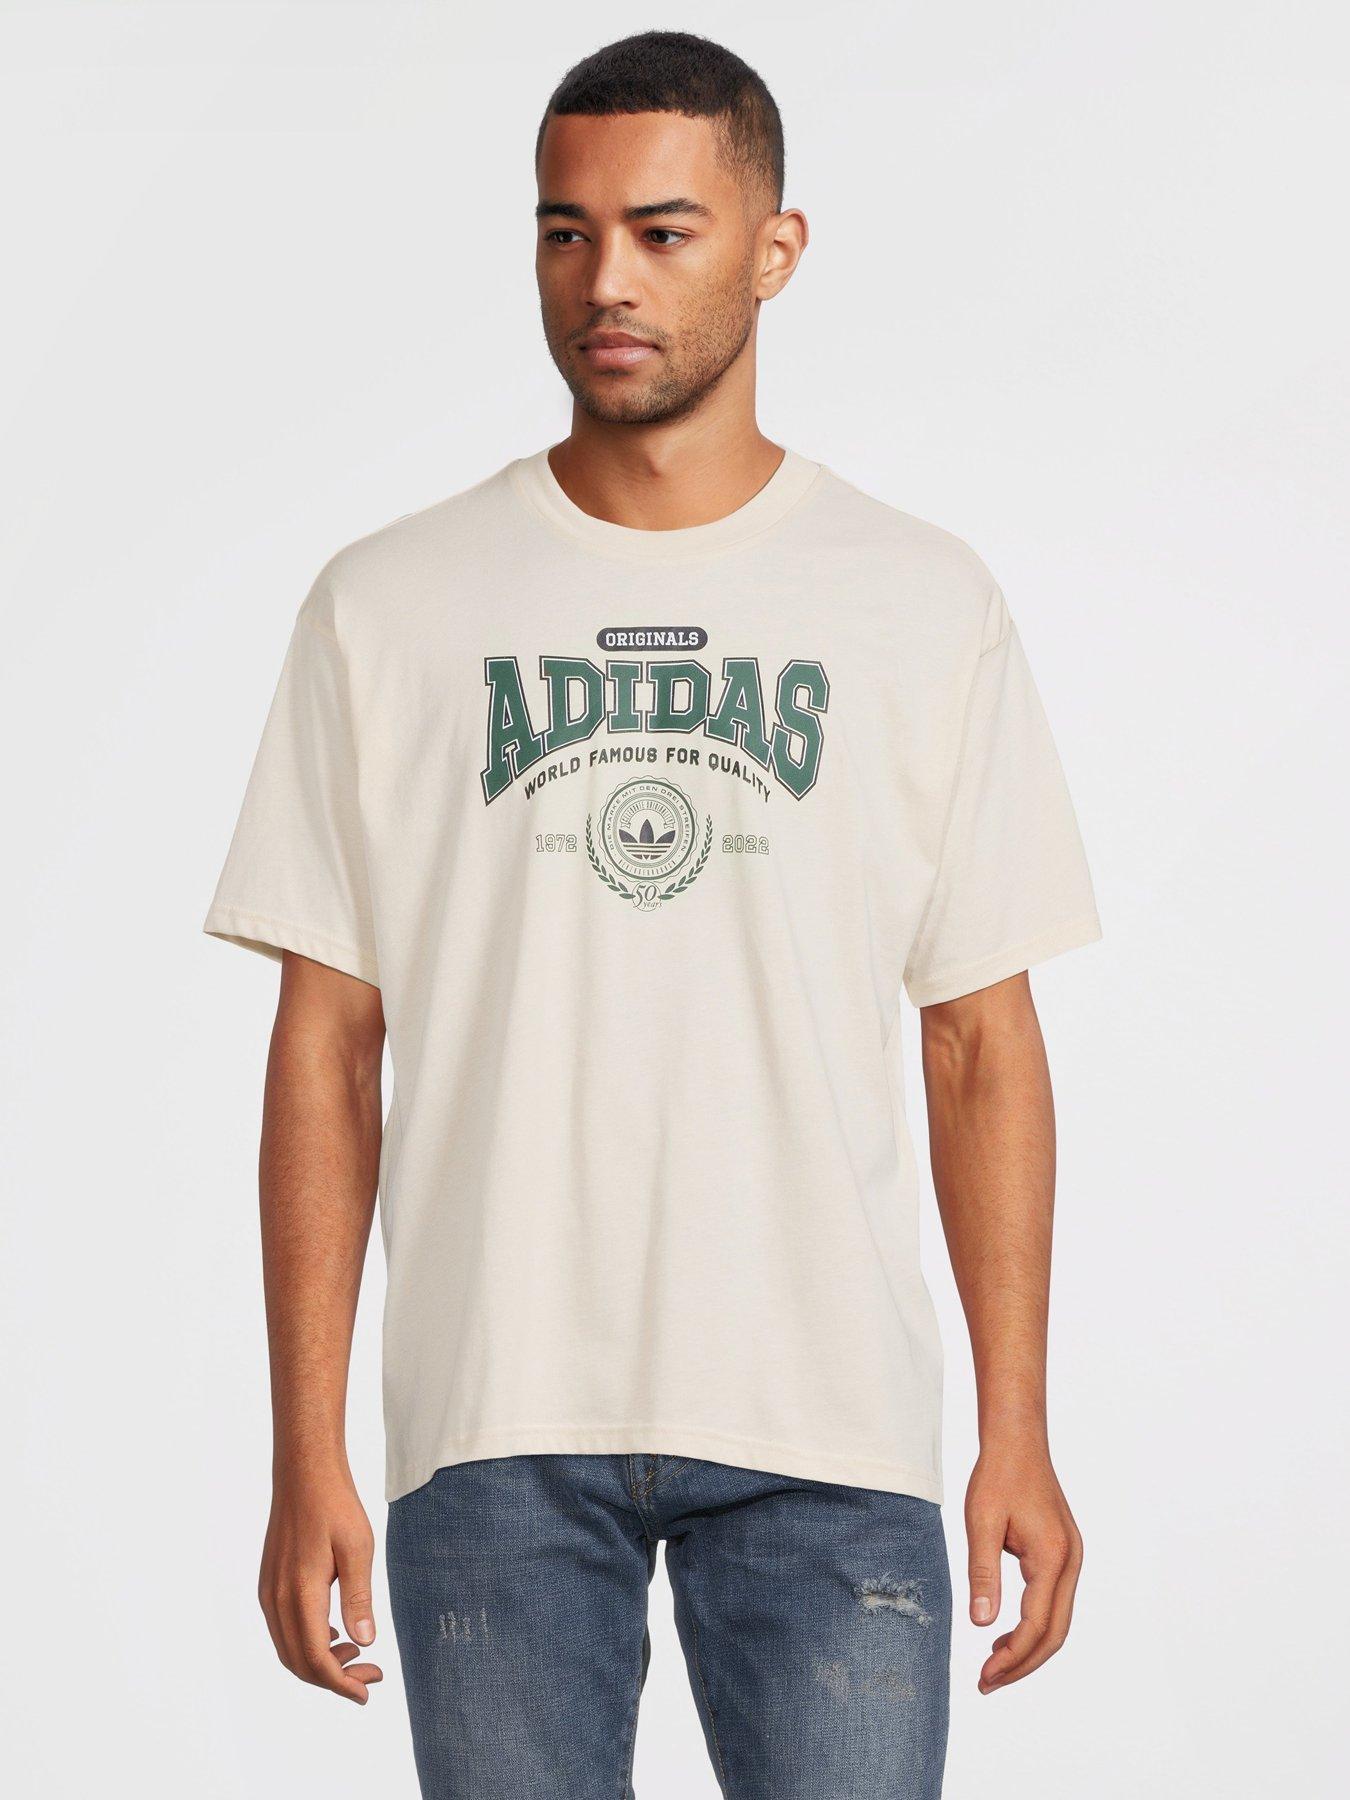 discount 88% Adidas T-shirt MEN FASHION Shirts & T-shirts Casual Gray M 